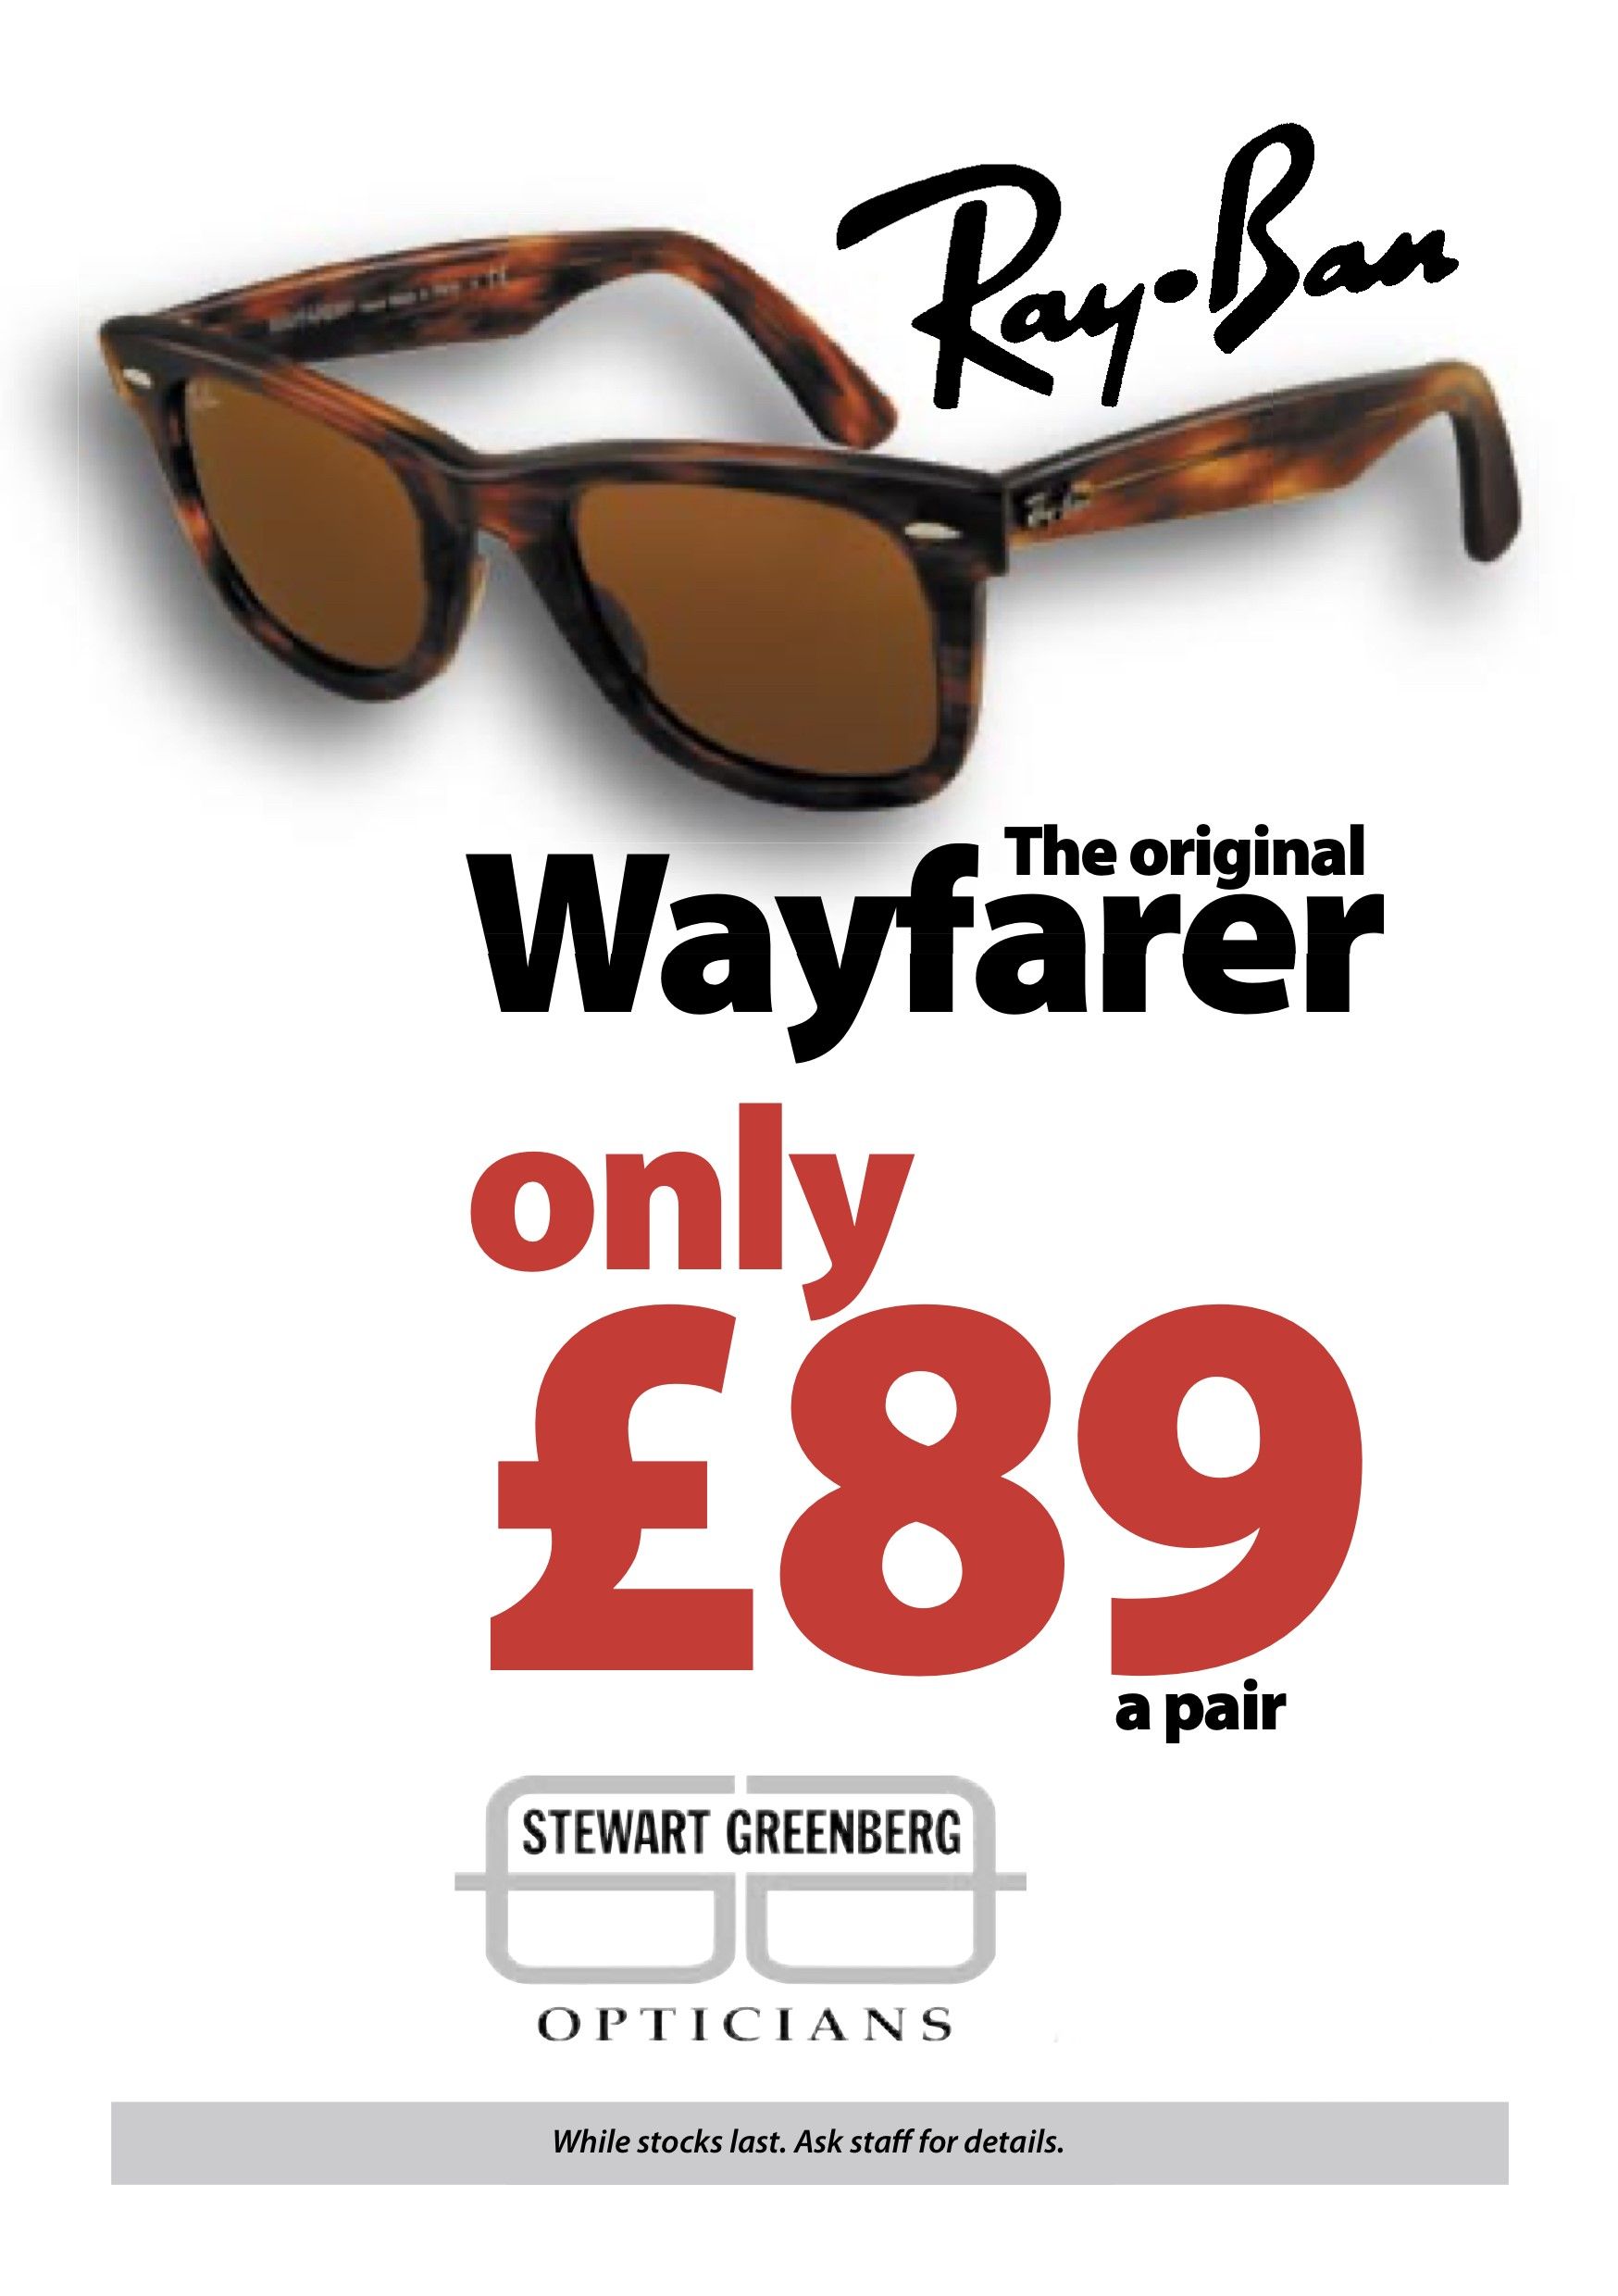 Ray-Ban Wayfarer Sunglasses Offer 